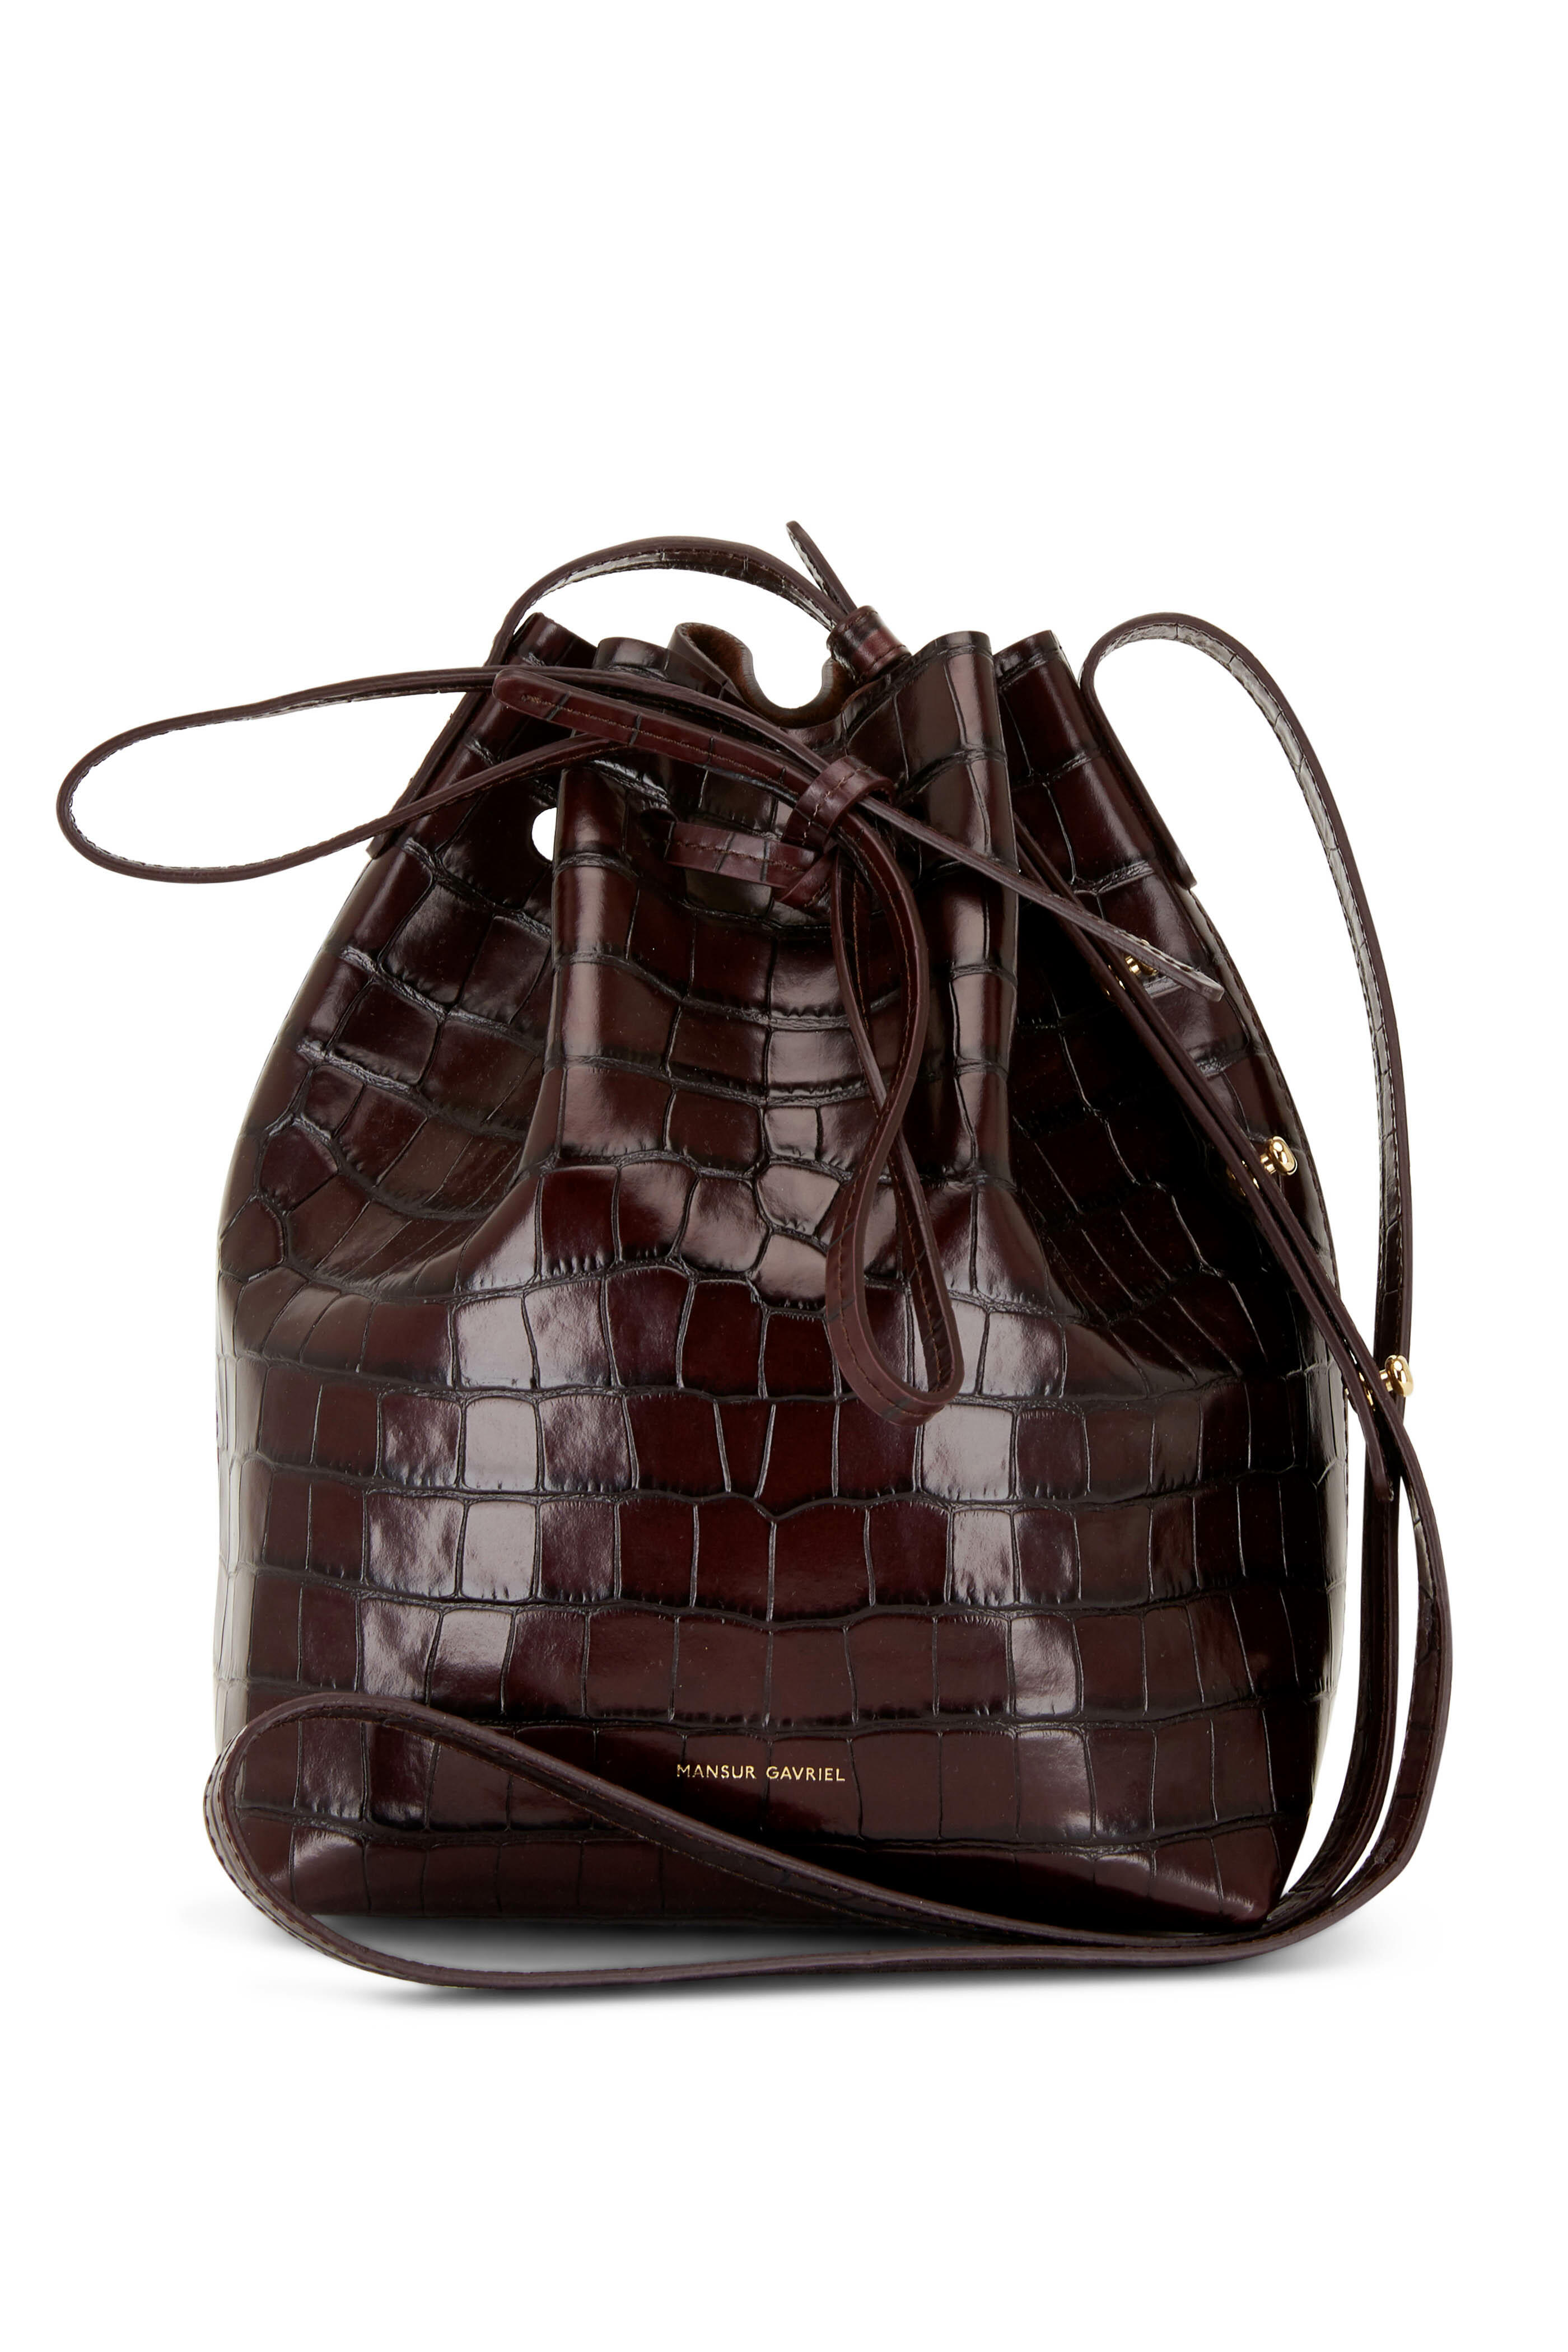 Mansur Gavriel woven leather bucket bag, Brown